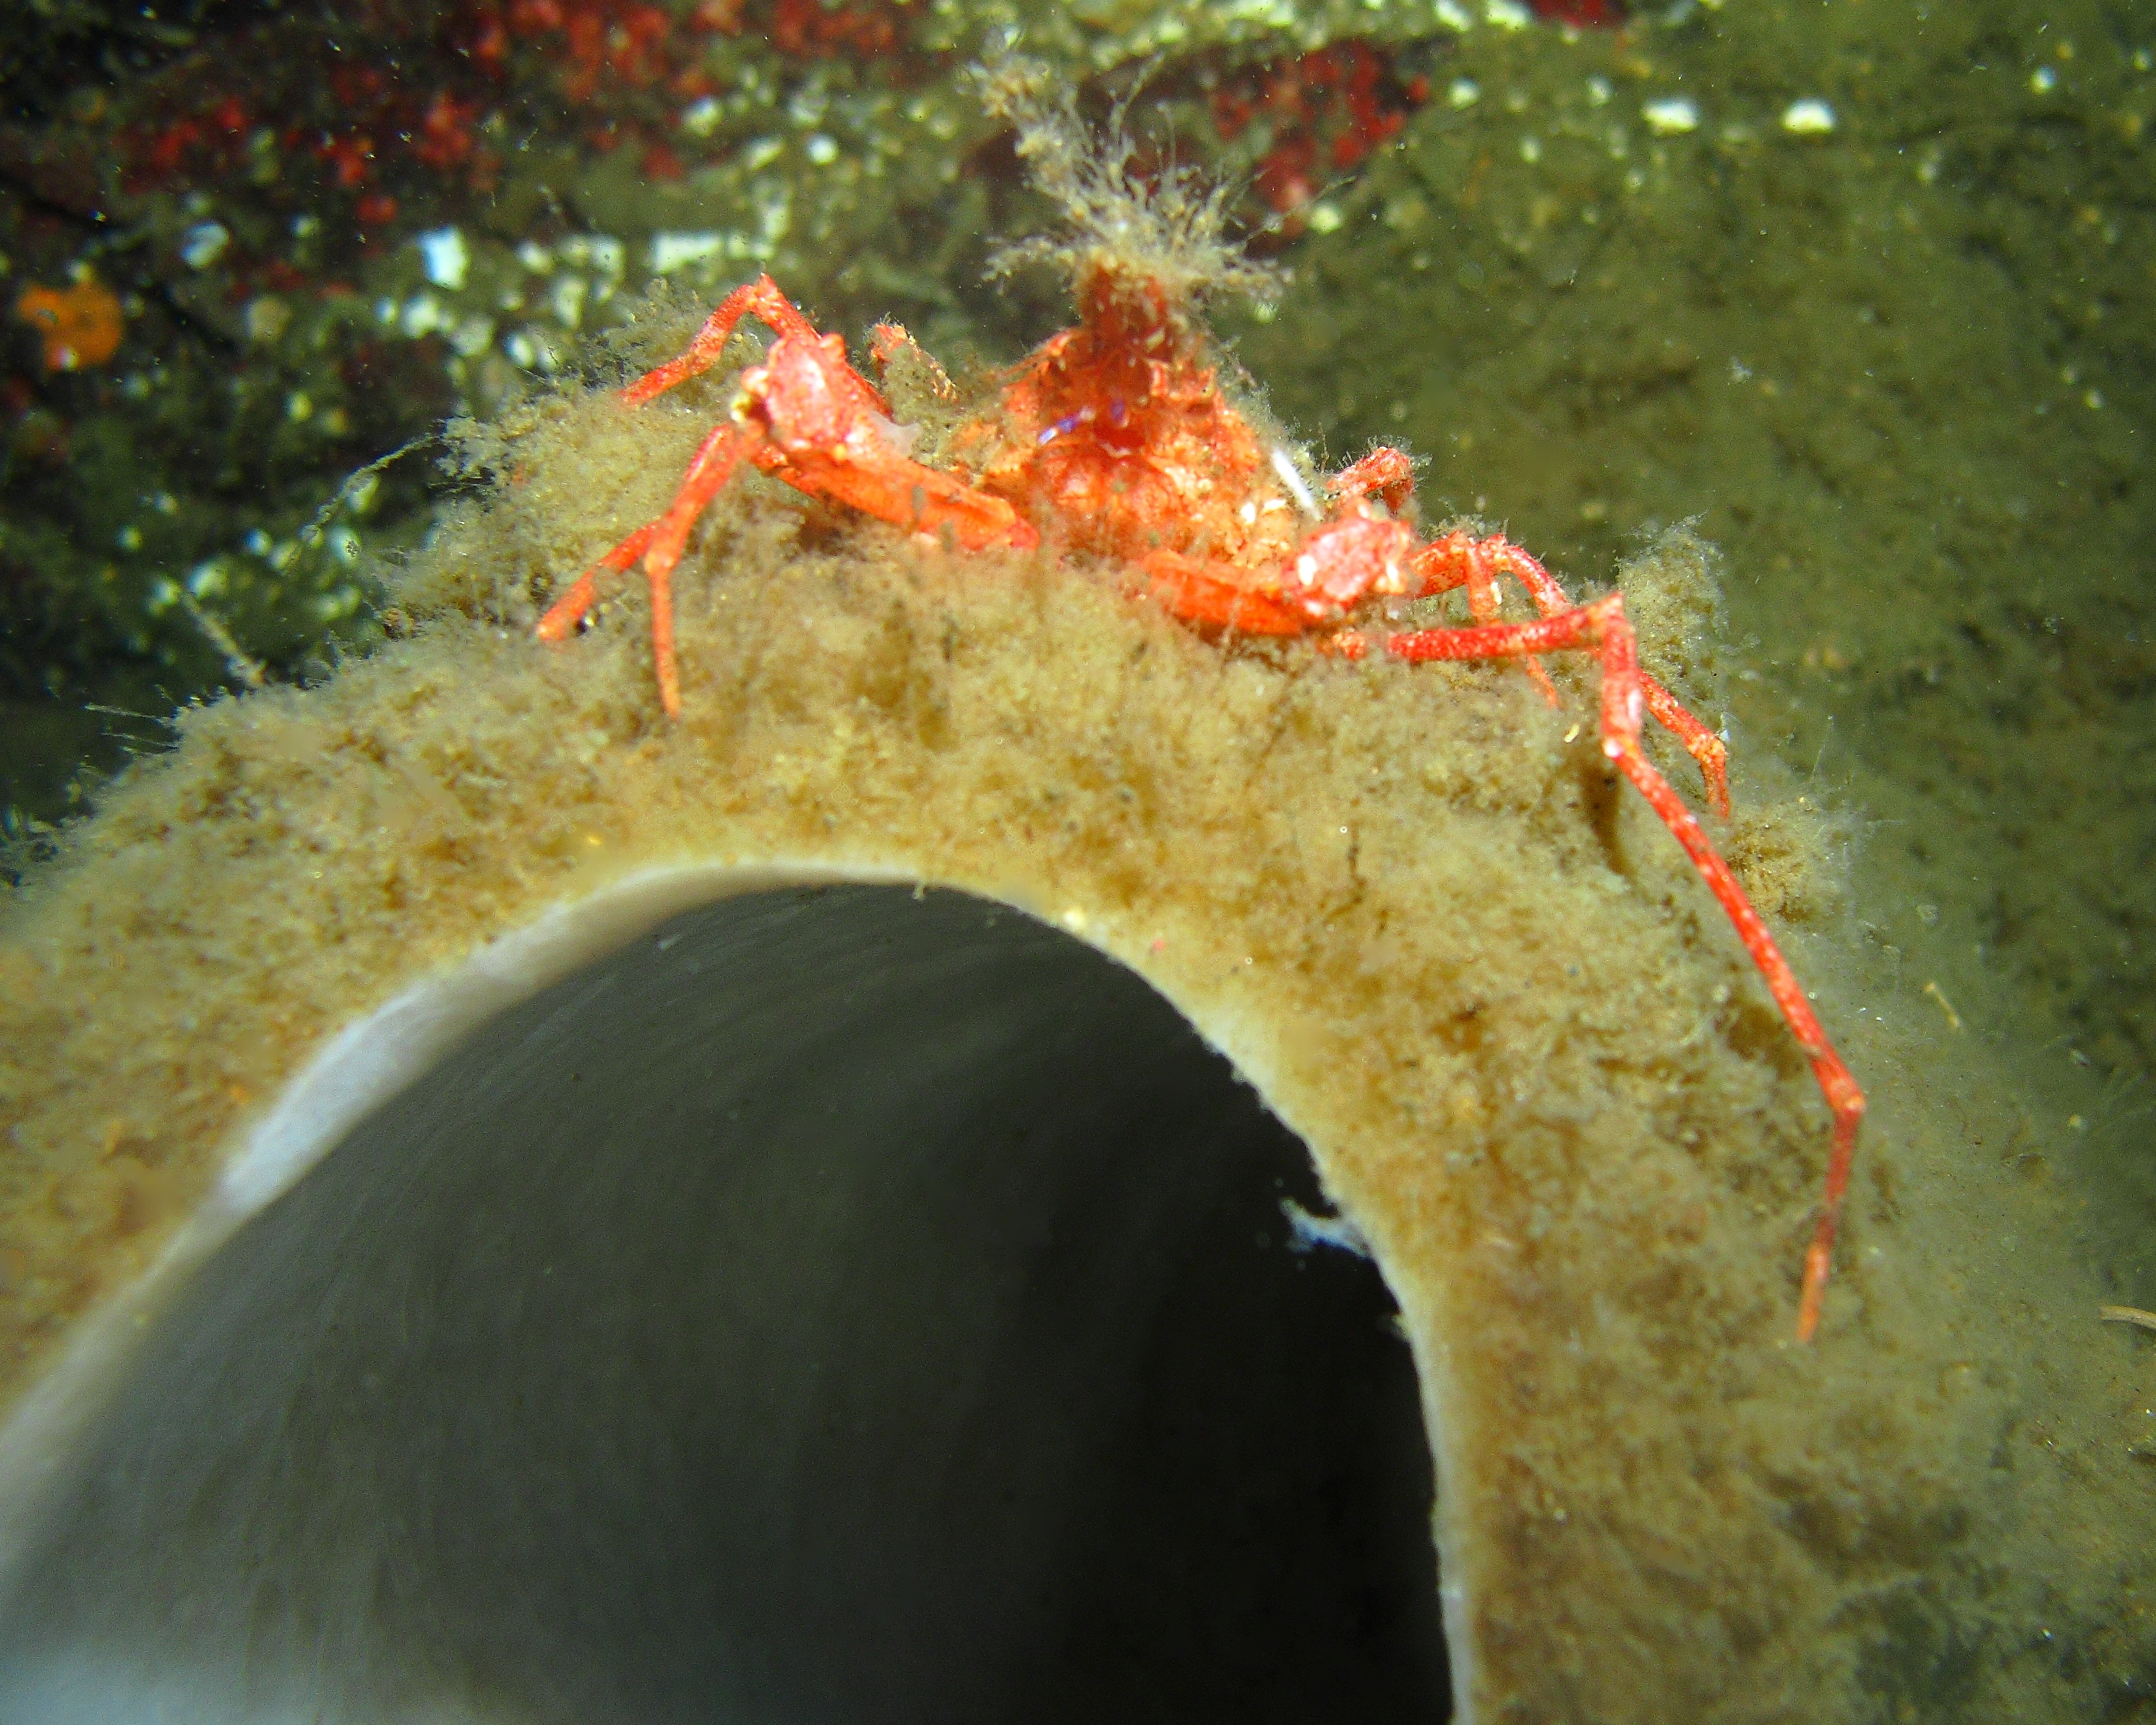 decorator crab on sponge